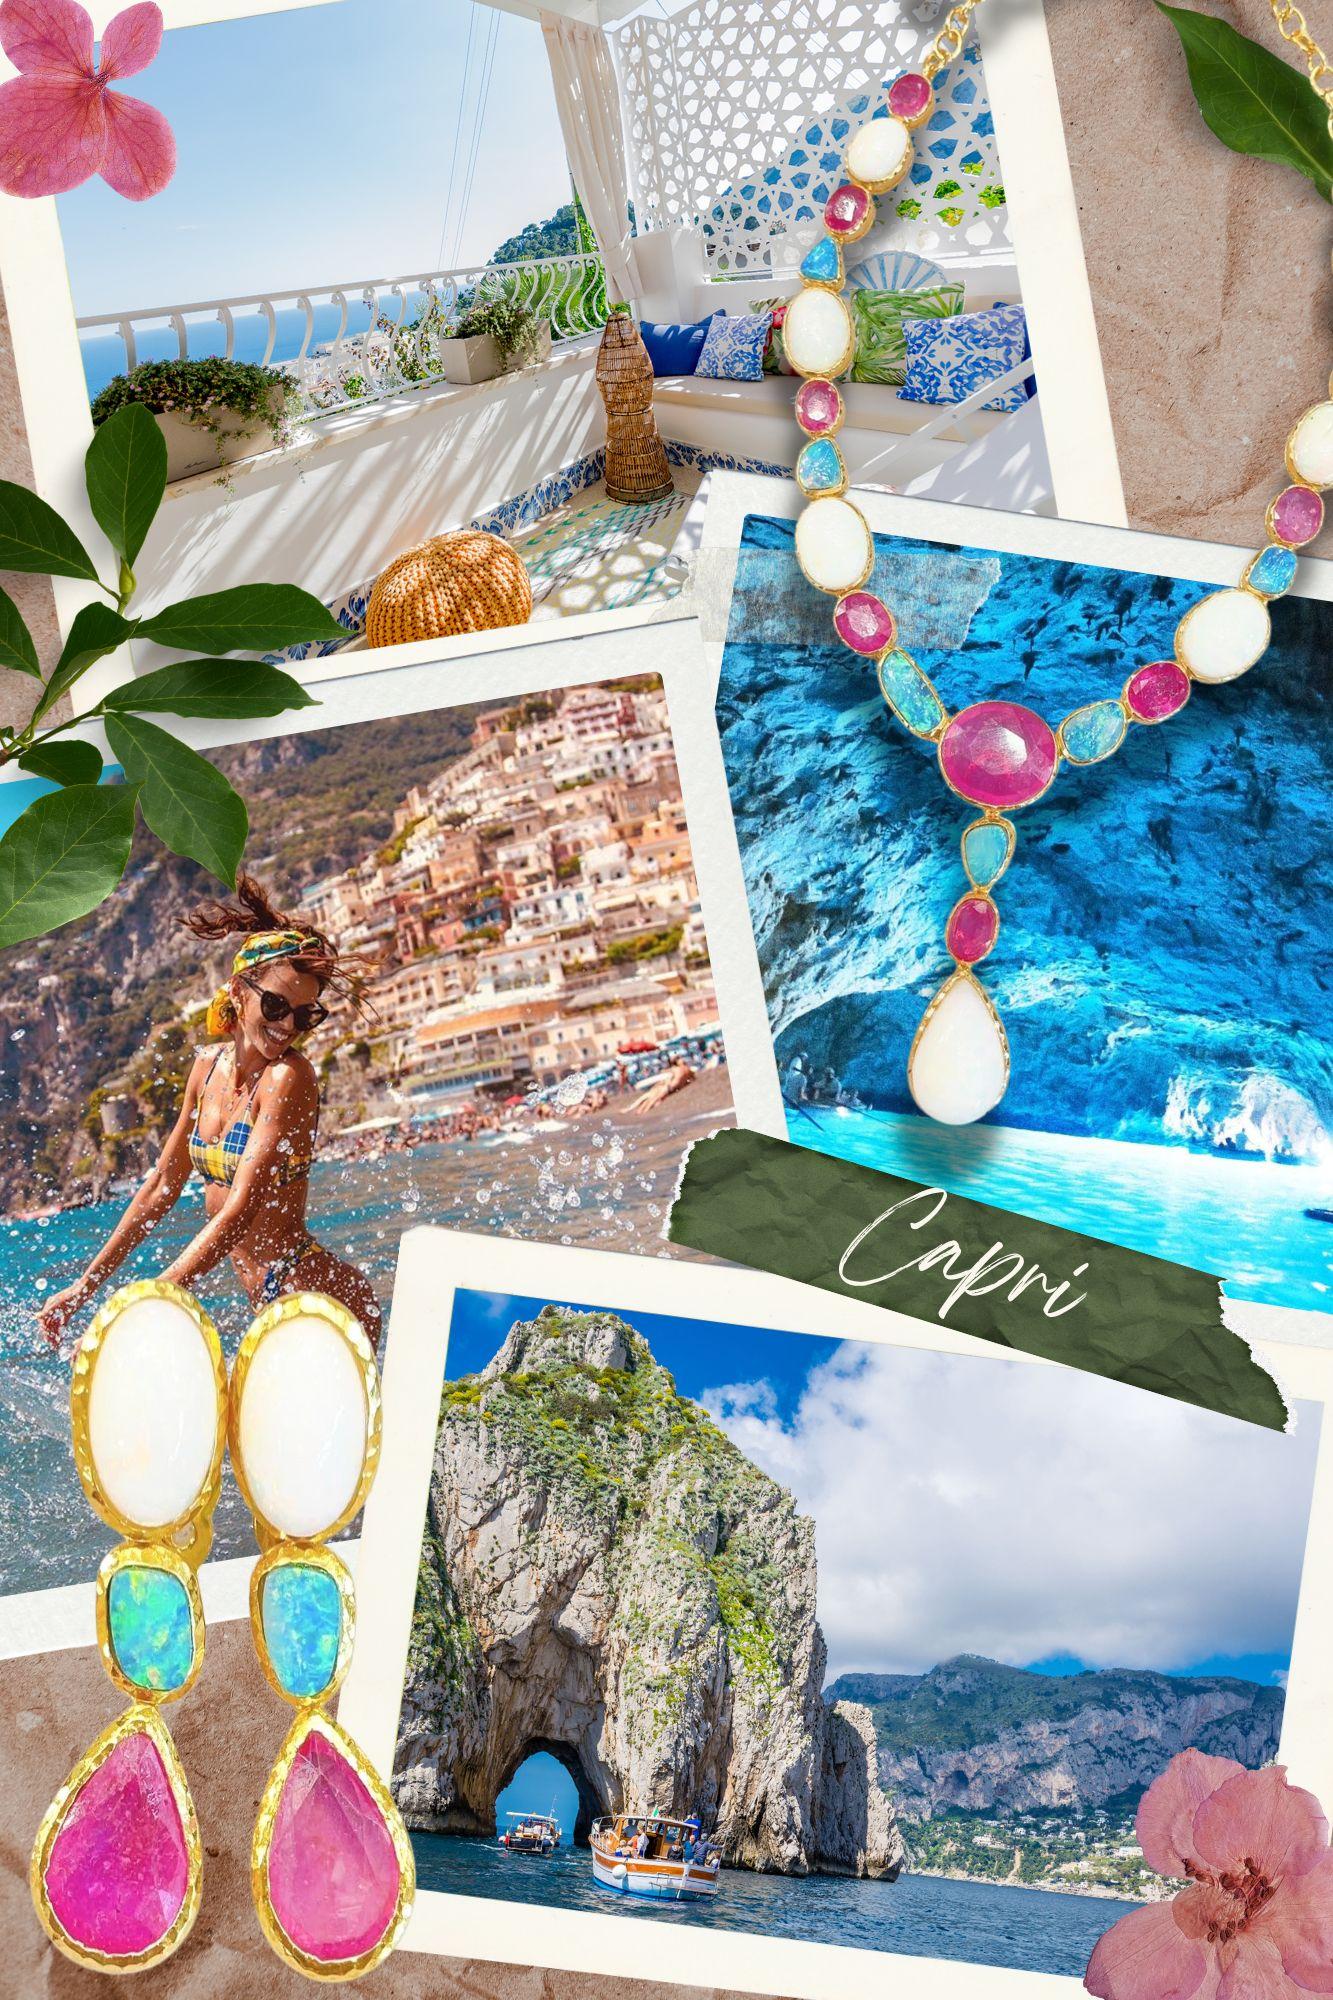 Bochic “Capri” Blue Sapphire, Ruby & Topaz Cocktail Ring Set in 22k Gold & Silve For Sale 5